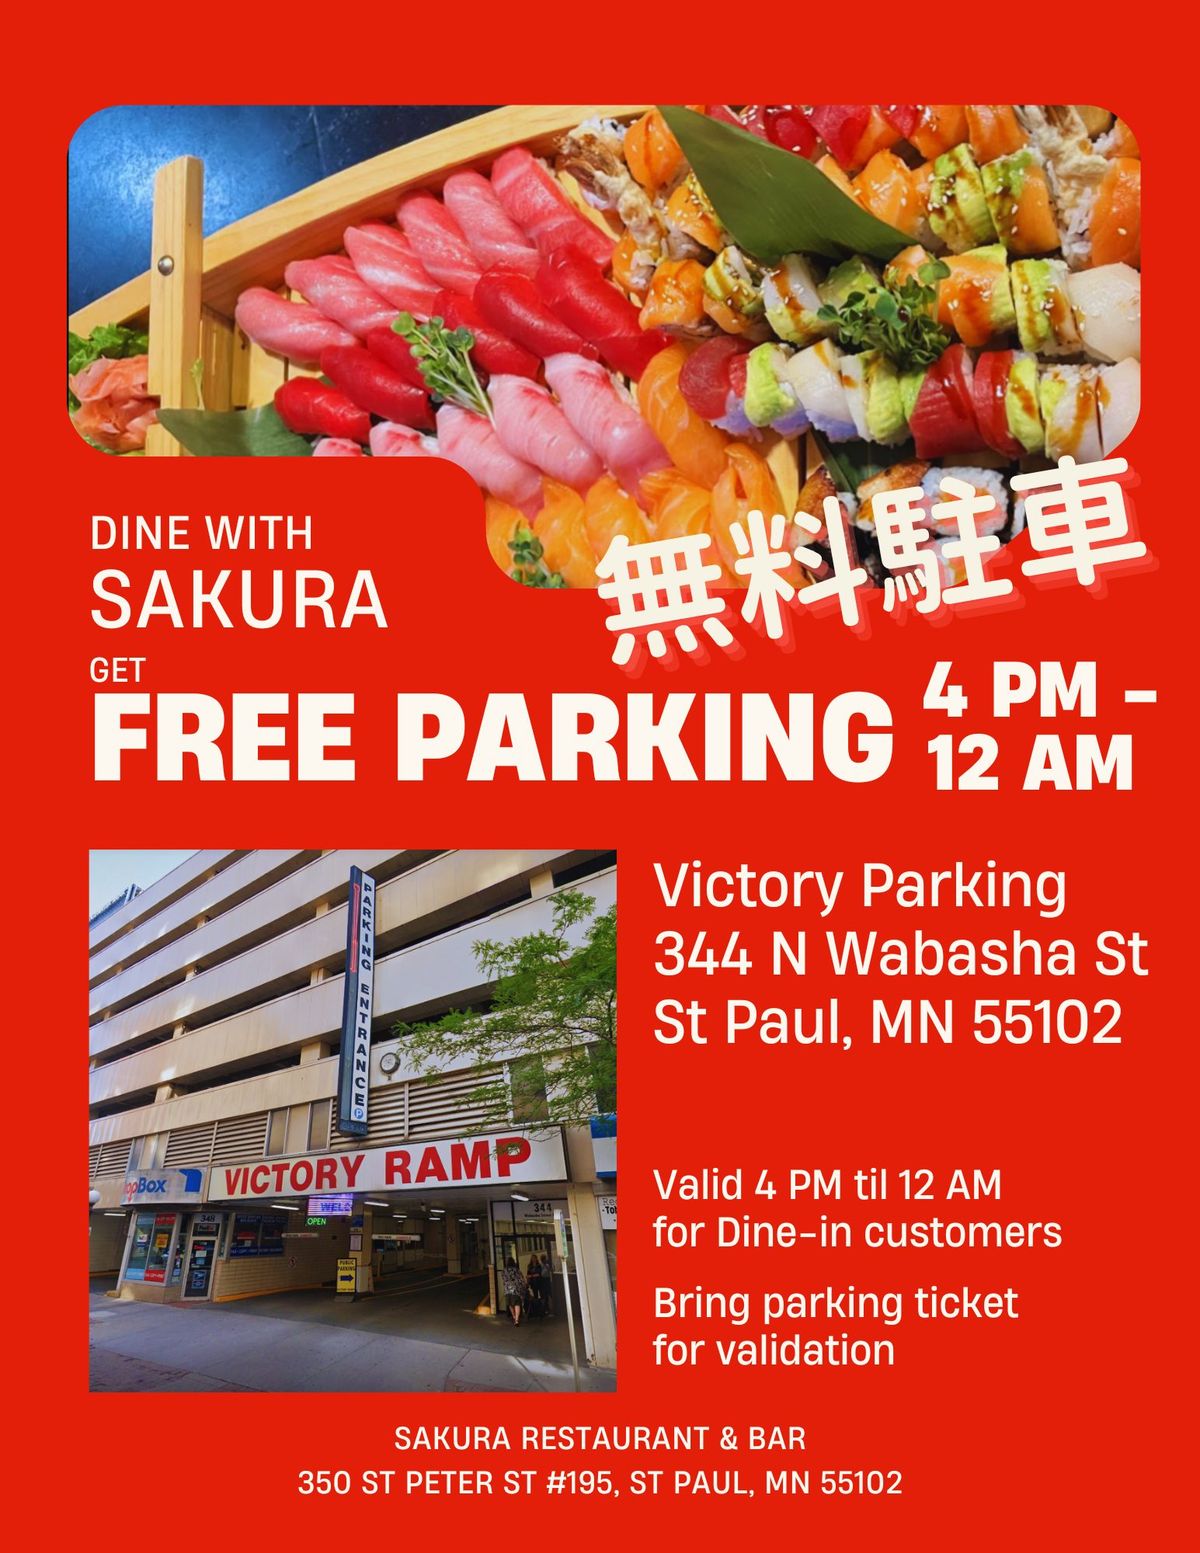 Free Parking! when you dine with Sakura